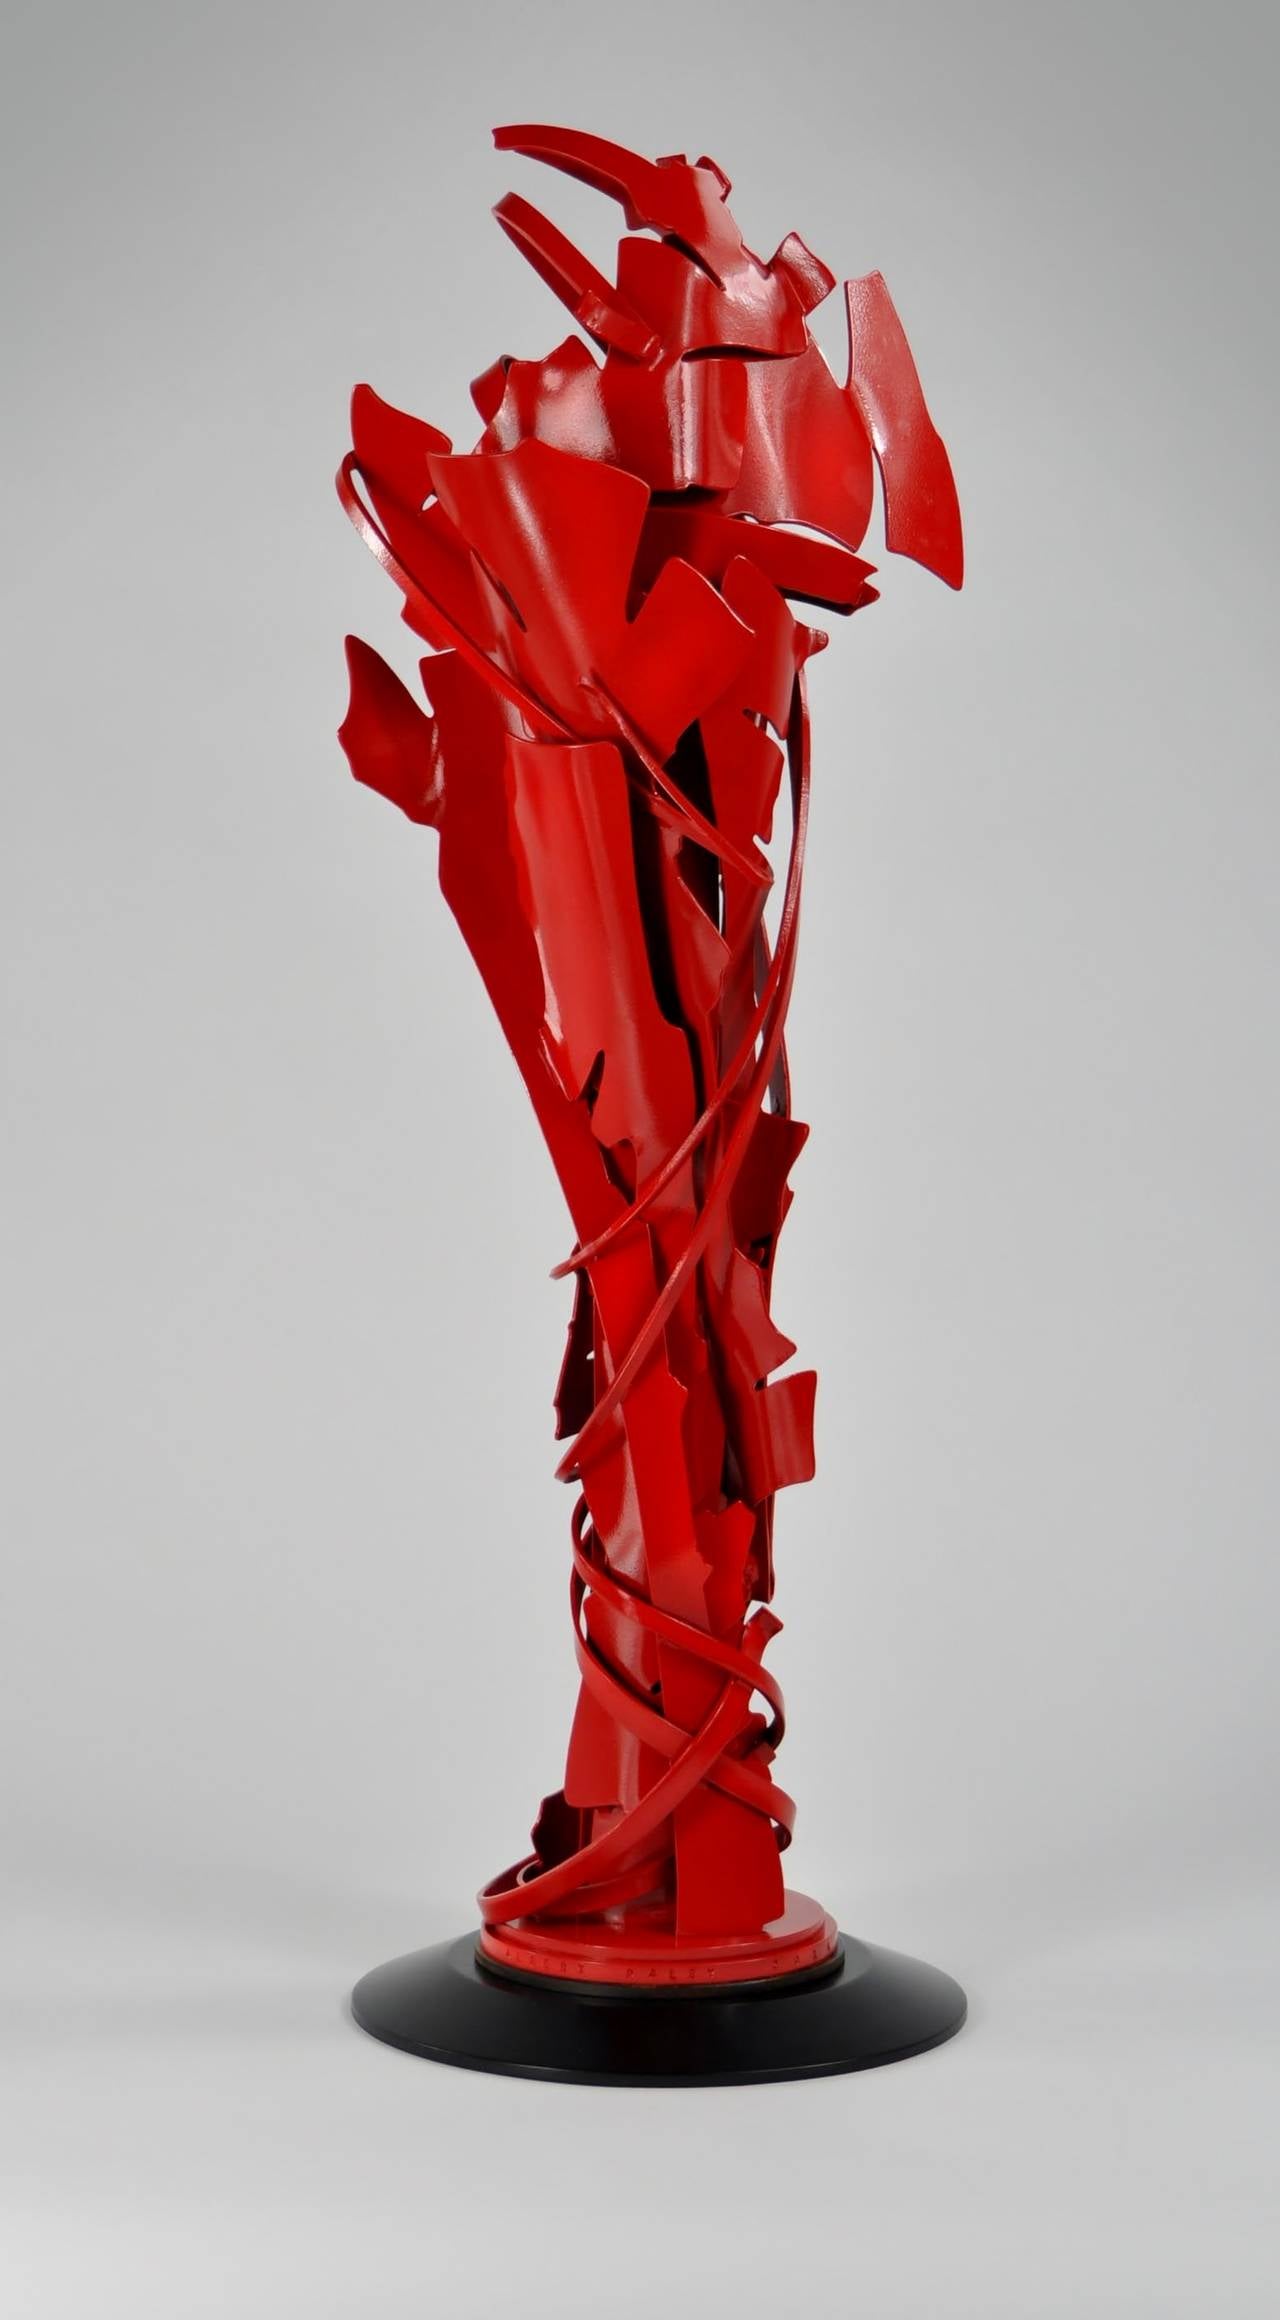 Contemporary American metal sculptor Albert Paley's 